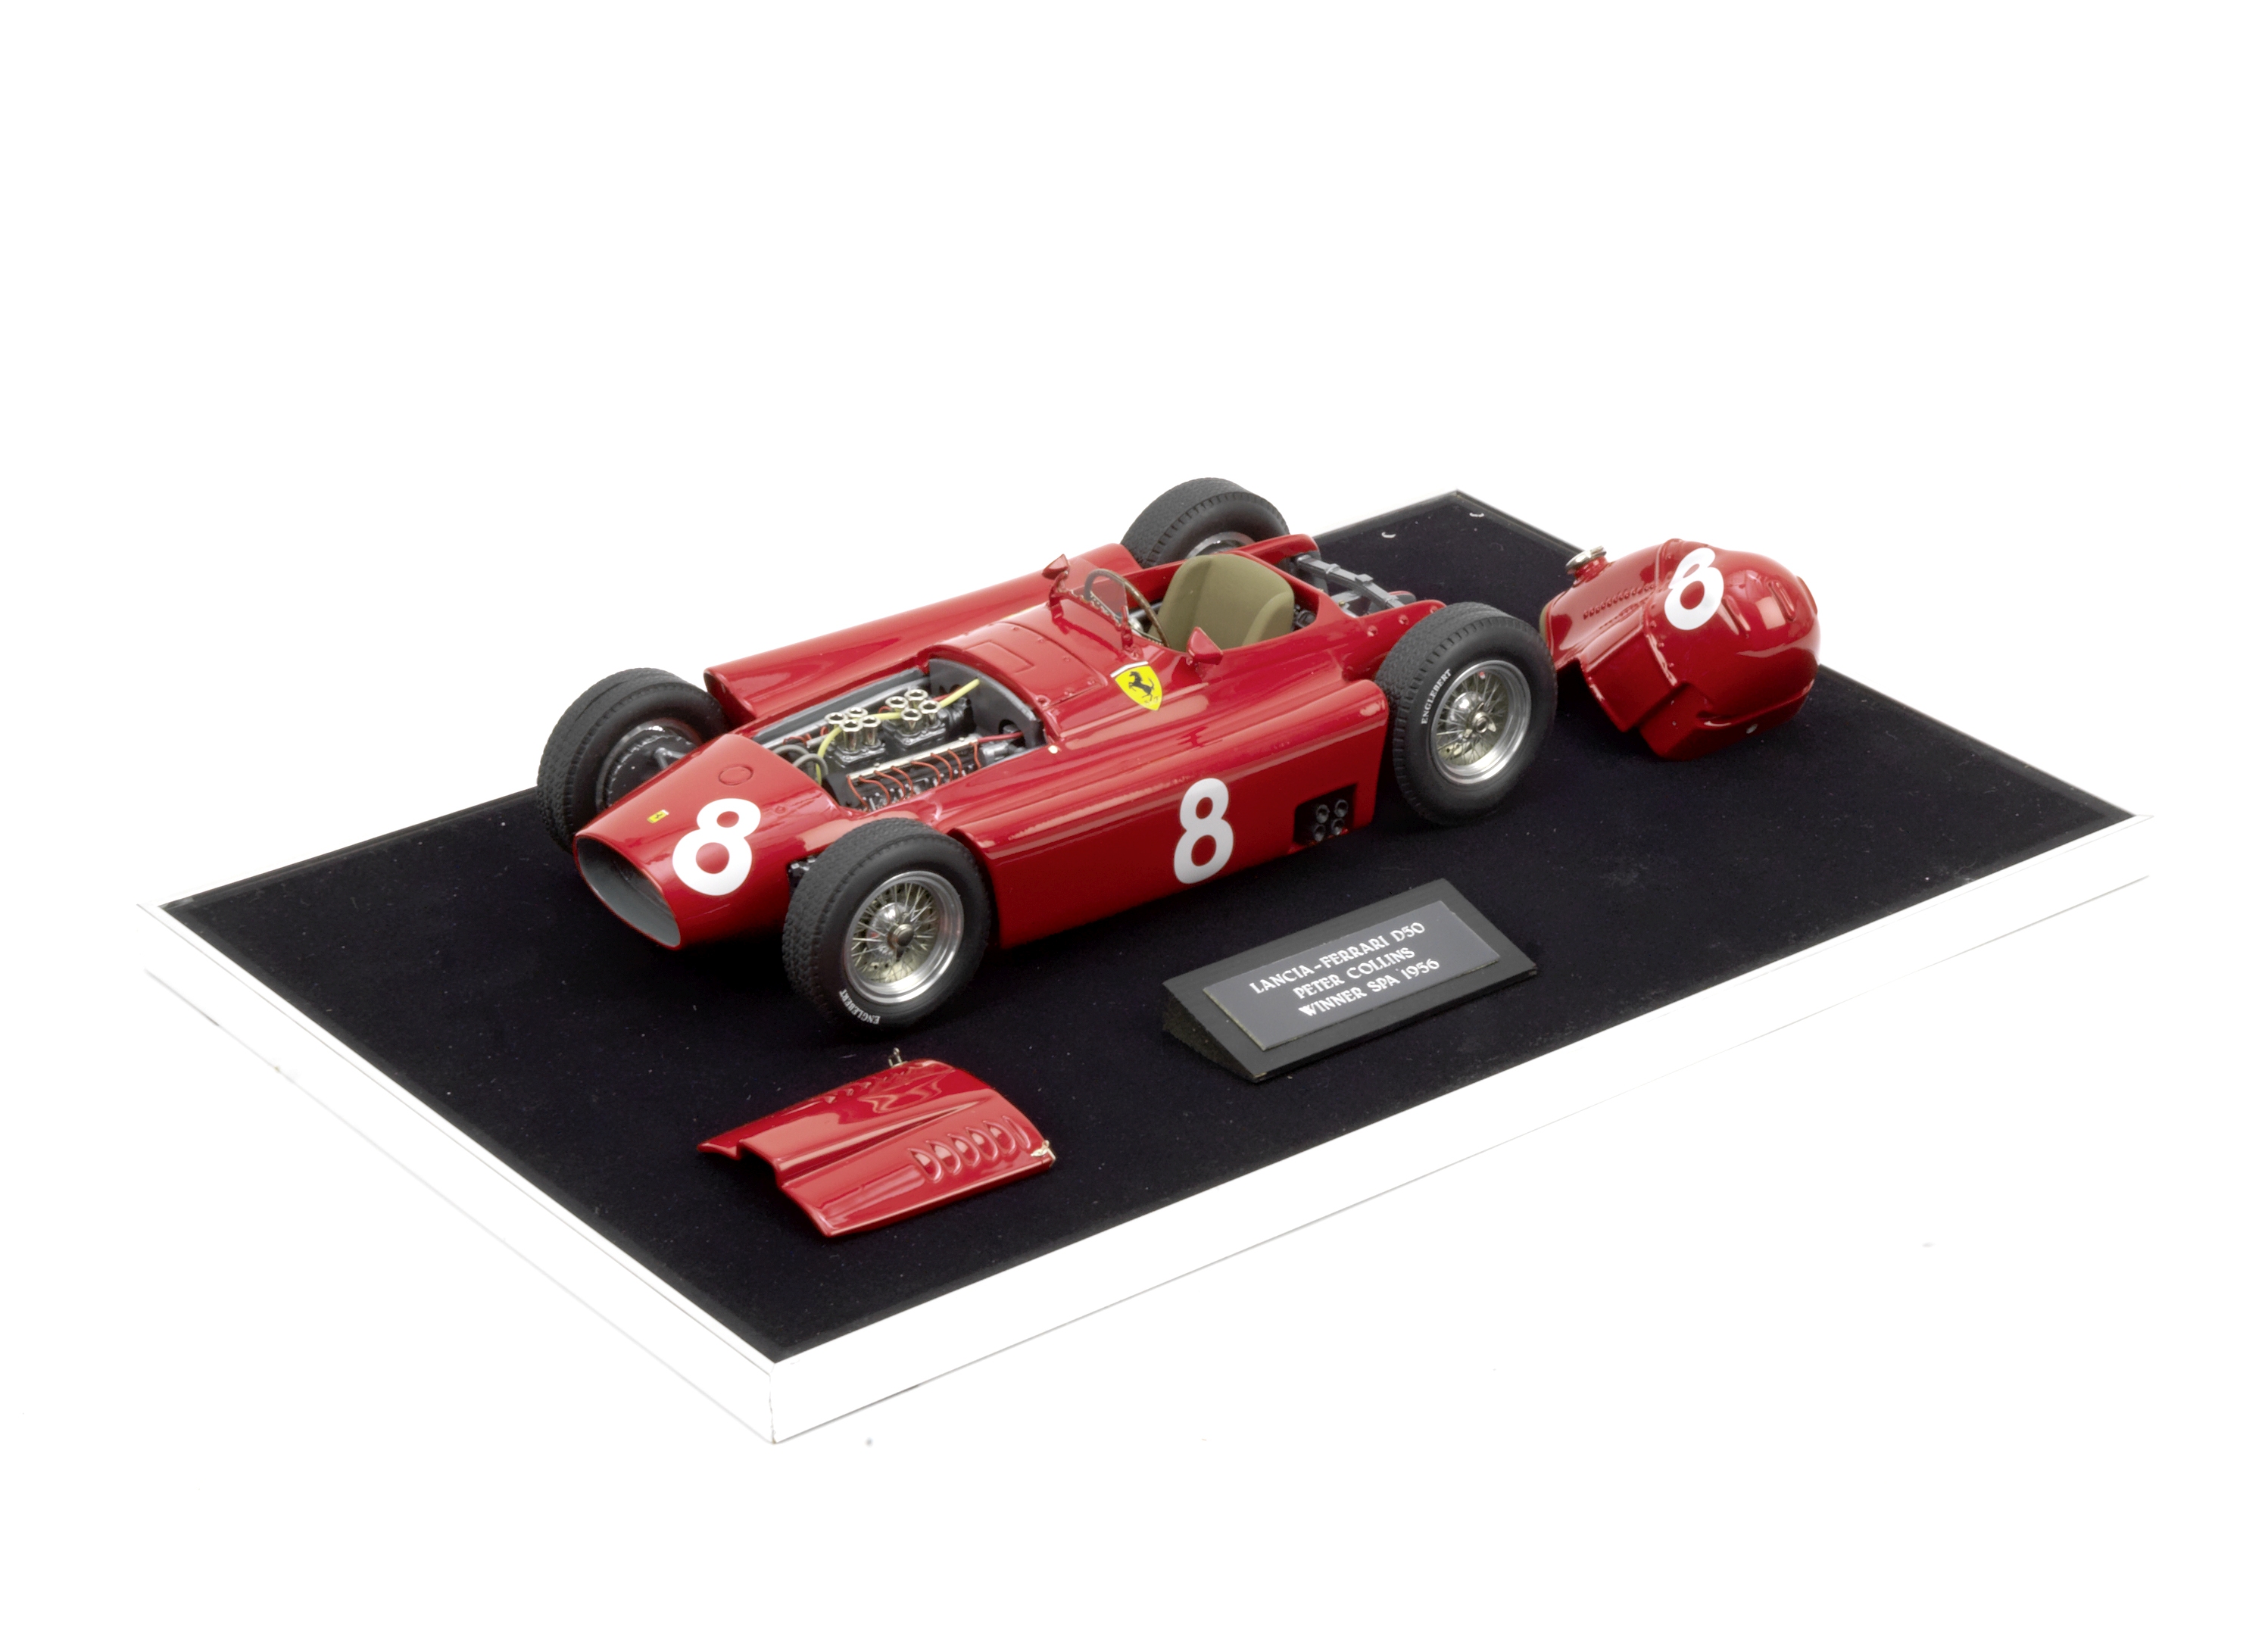 A 1:12 scale model of Peter Collin's 1956 Belgian Grand Prix winning Lancia-Ferrari D50,